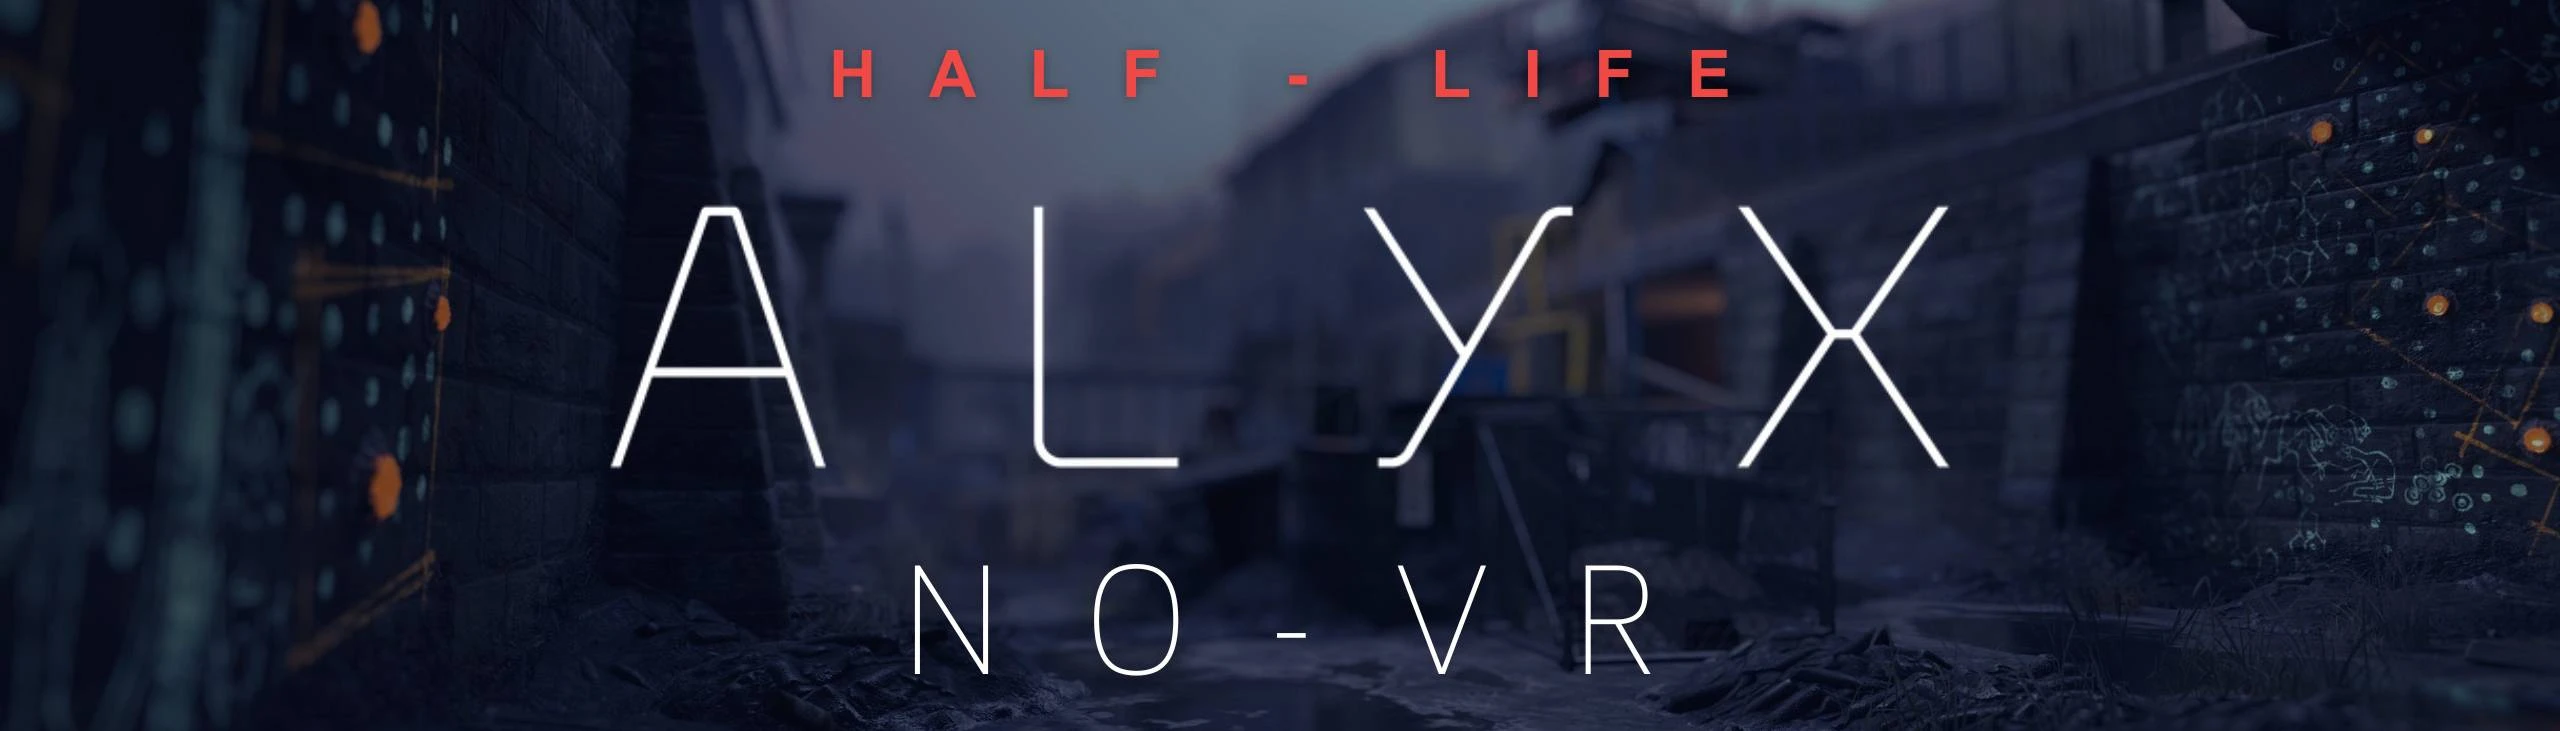 Half-Life - Alyx FakeVR Mod at Half-Life: Alyx Nexus - Mods and community